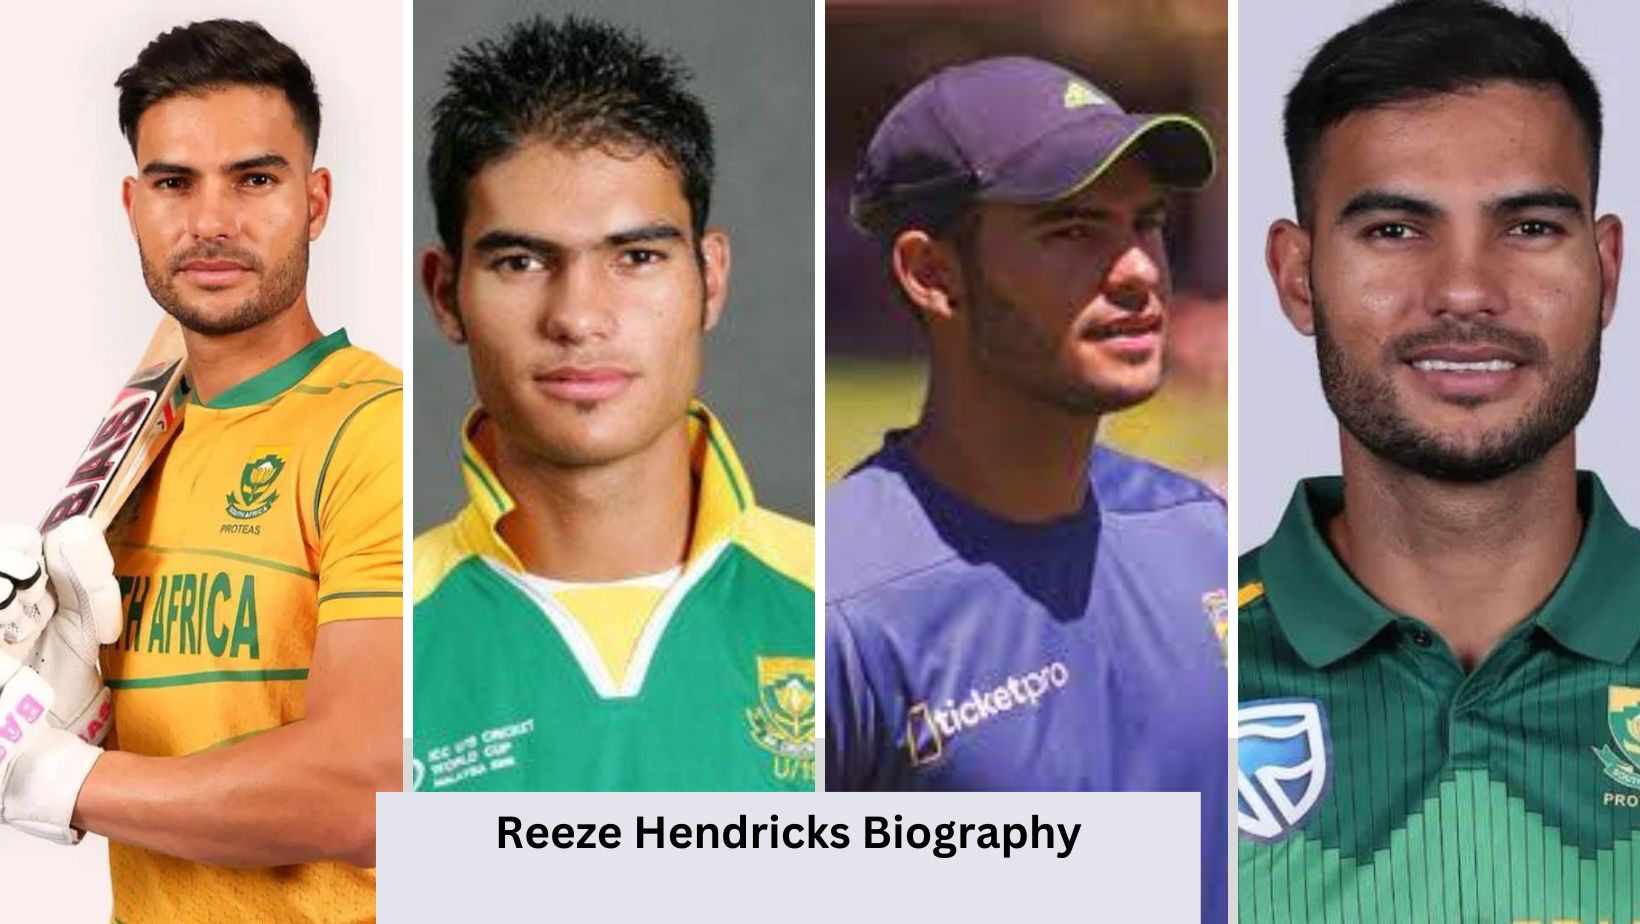 Reeze Hendricks Biography